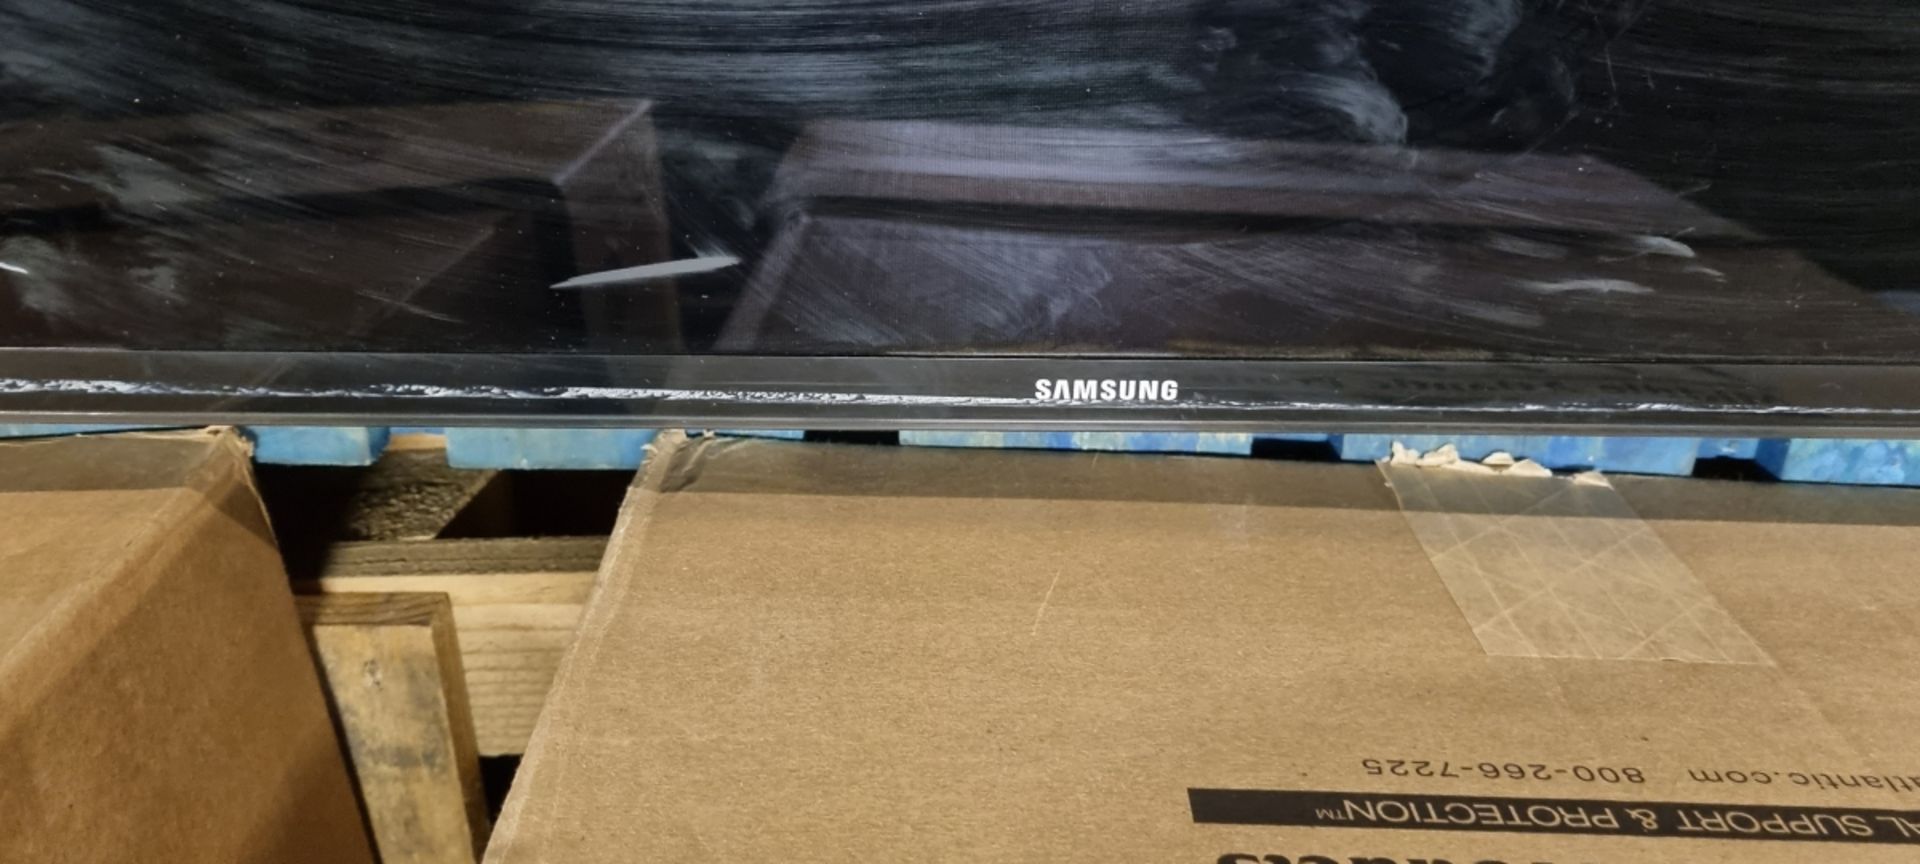 Samsung UE75H6400AK 75 inch smart TV - no remote or power lead - Image 3 of 6